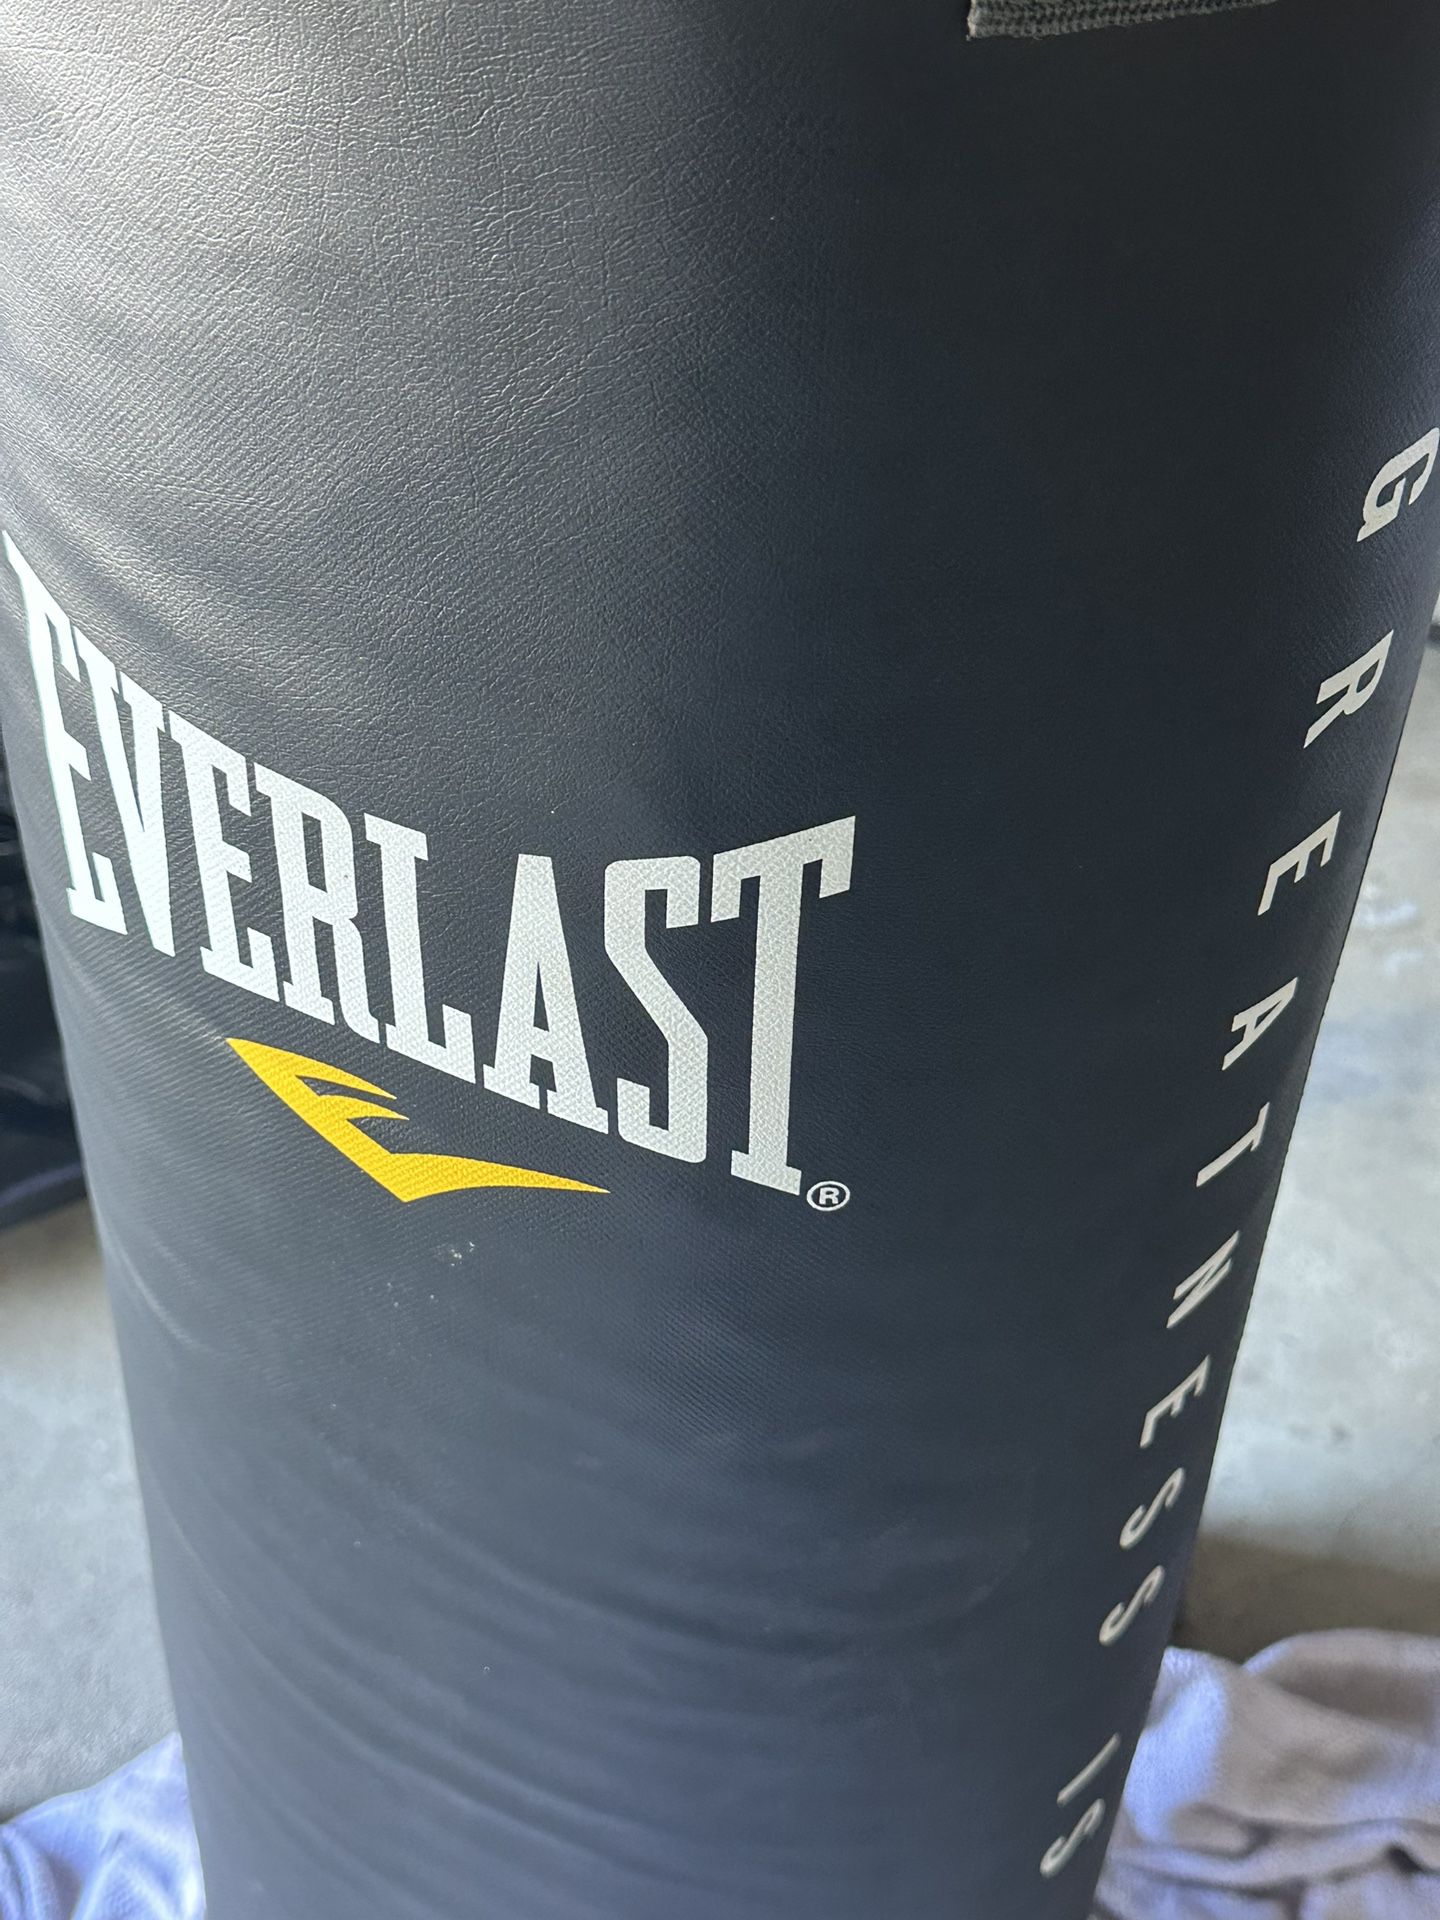 Everlast Punching Bag.